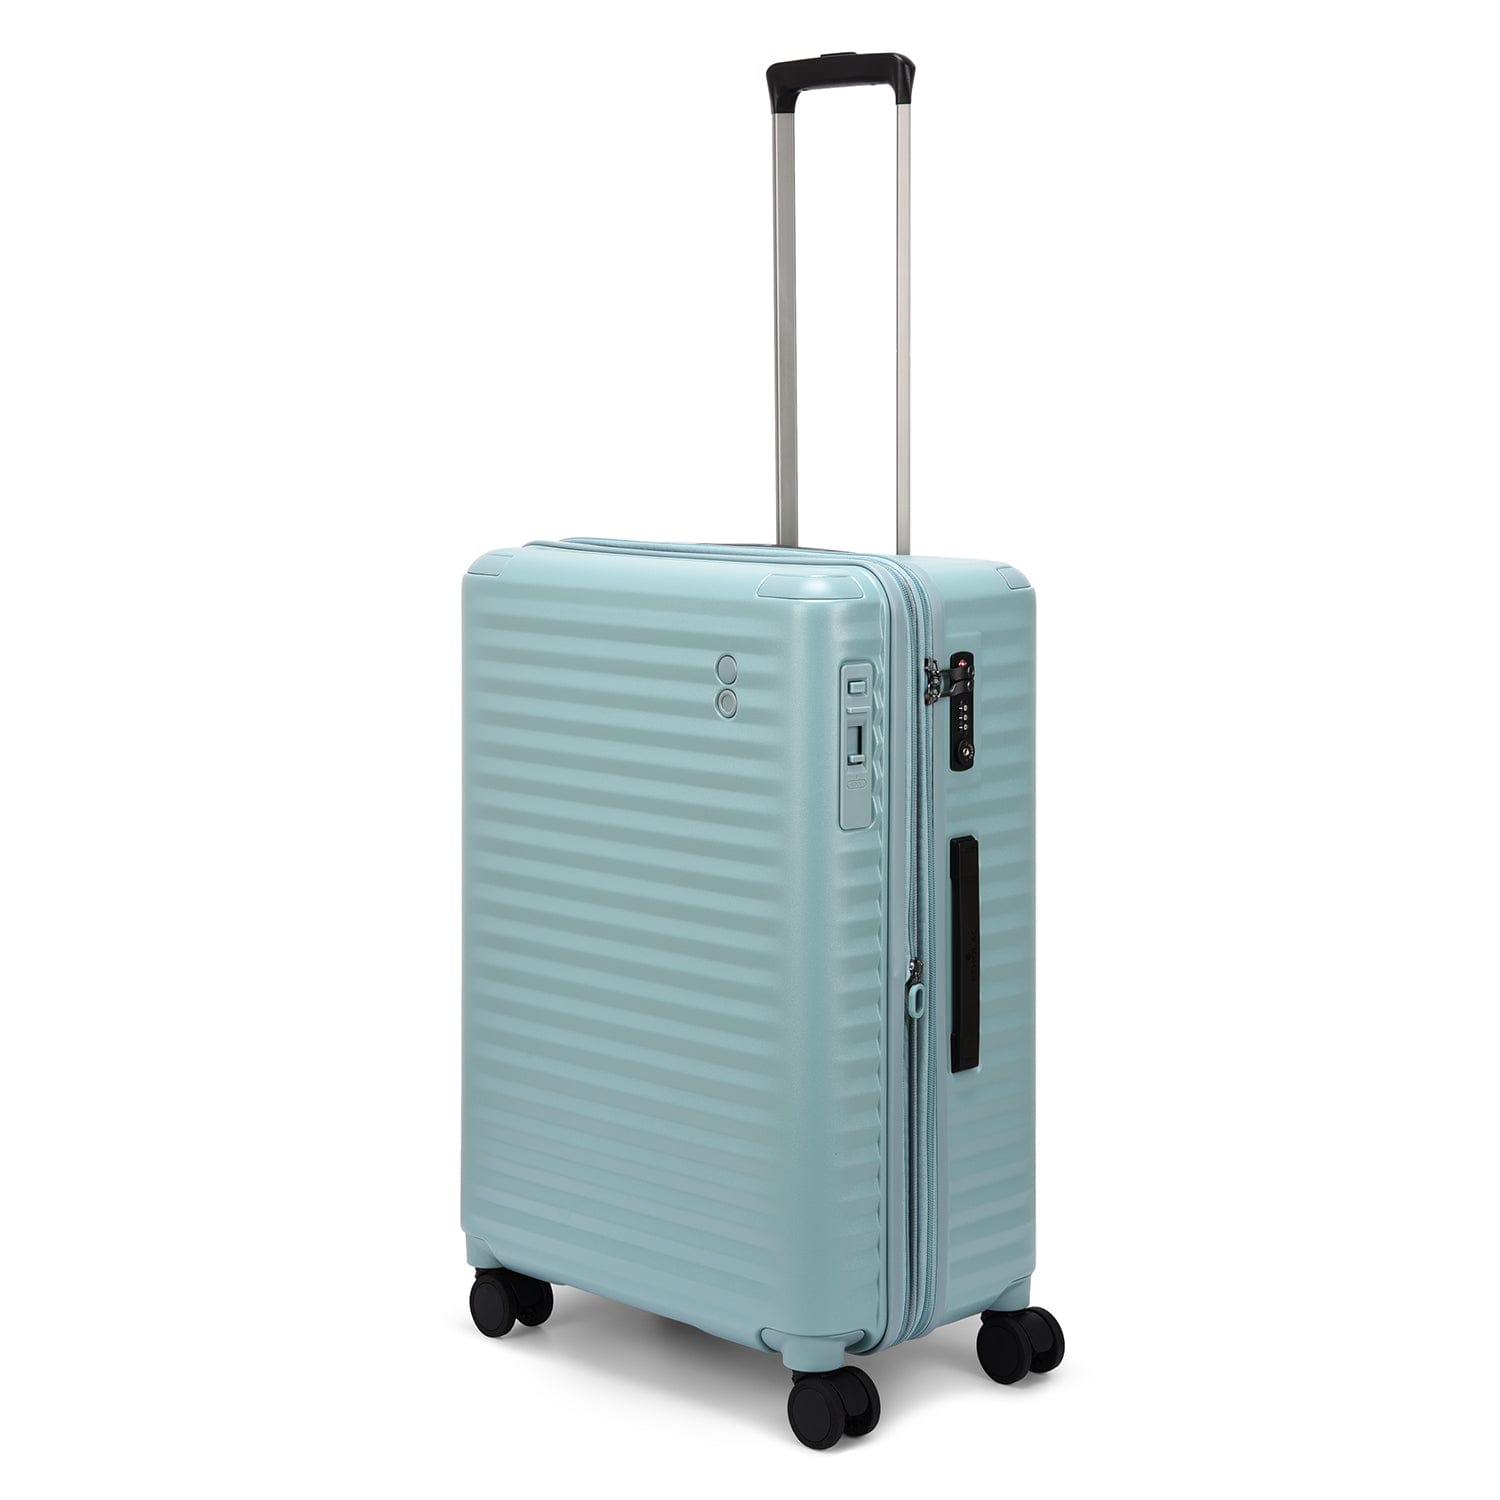 Echolac Celestra 66.5cm Hardcase Expandable 4 Double Wheel Cabin Luggage Trolley Slate Blue - PC183XA SLATE BLUE 24